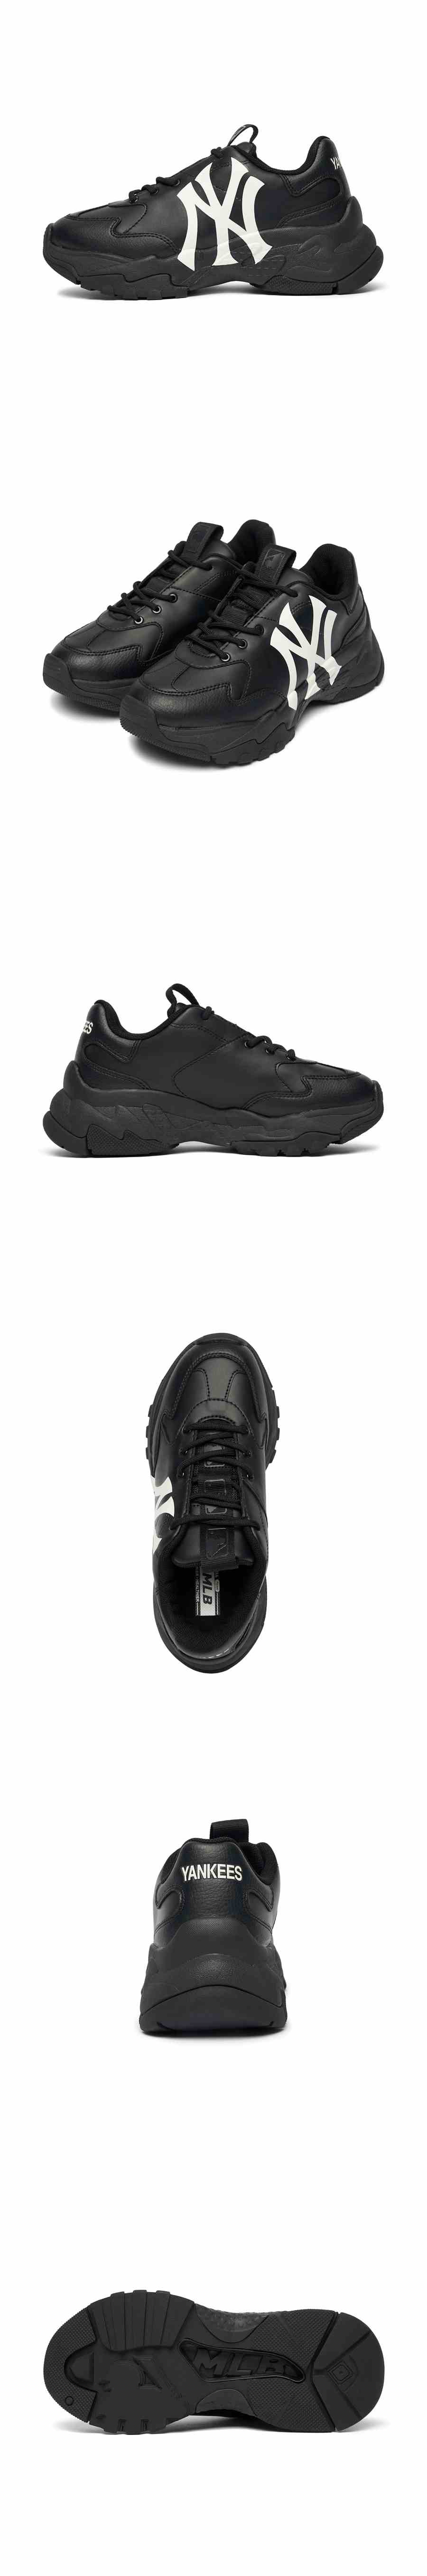 MLB KOREA Bigball Chunky A NY Sneakers Shoes Black 3ASHC101N-50BKS